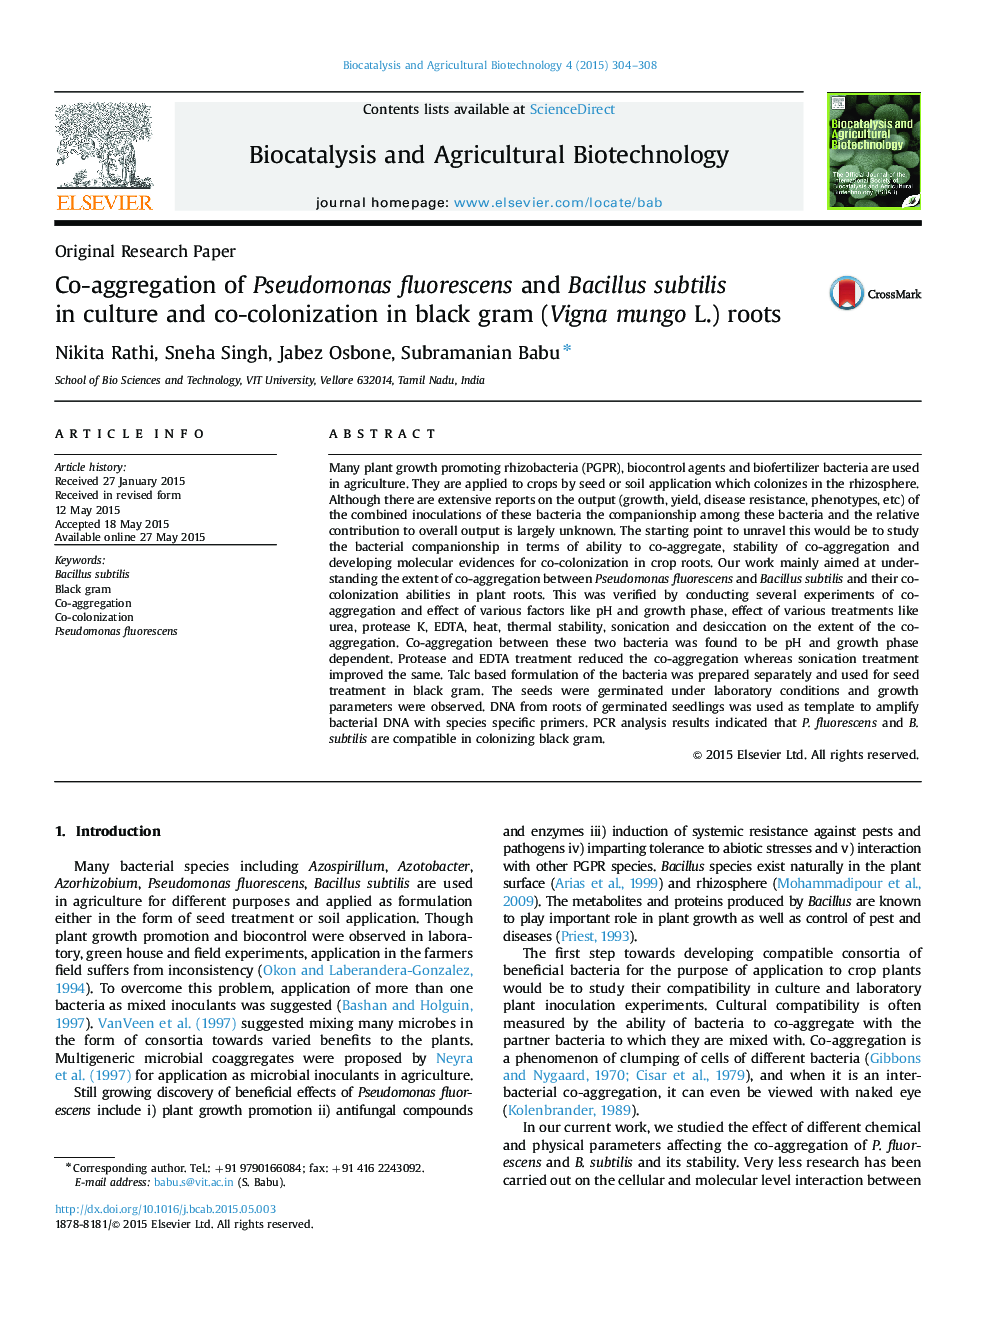 Co-aggregation of Pseudomonas fluorescens and Bacillus subtilis in culture and co-colonization in black gram (Vigna mungo L.) roots